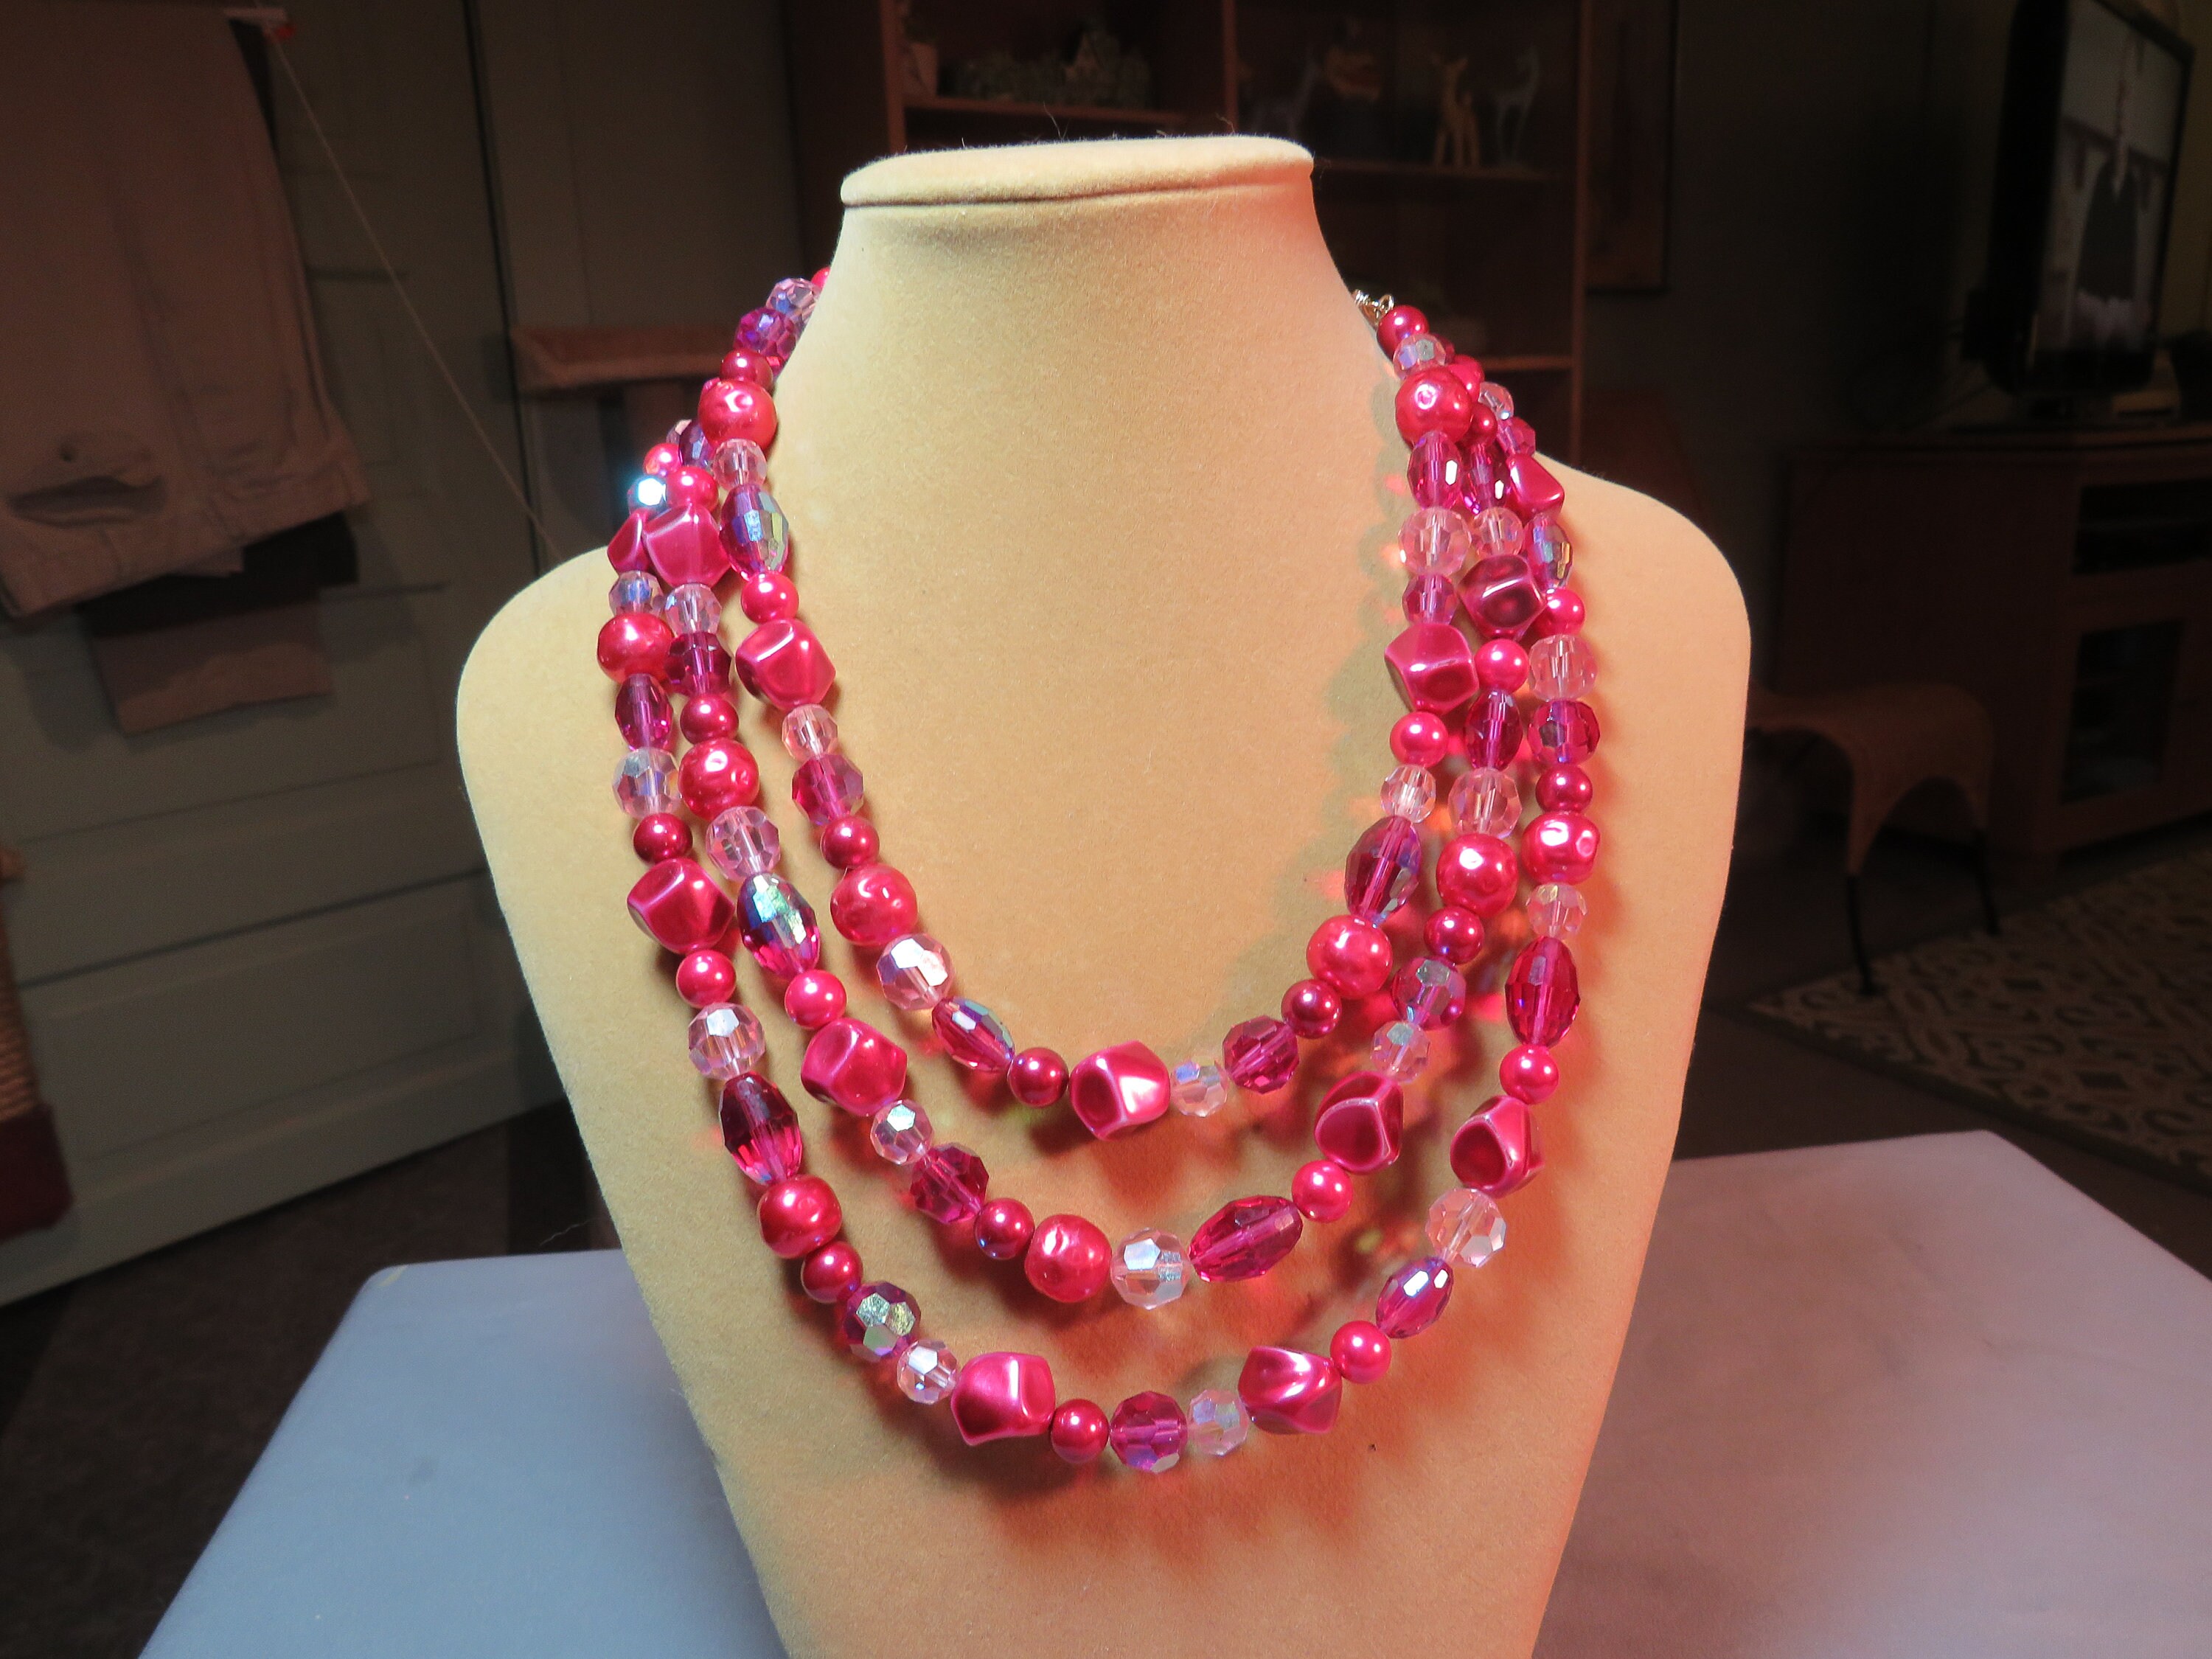 LOUIS VUITTON 18k Flower Diamond/Pink Sapphire Earrings – Vendome Inc